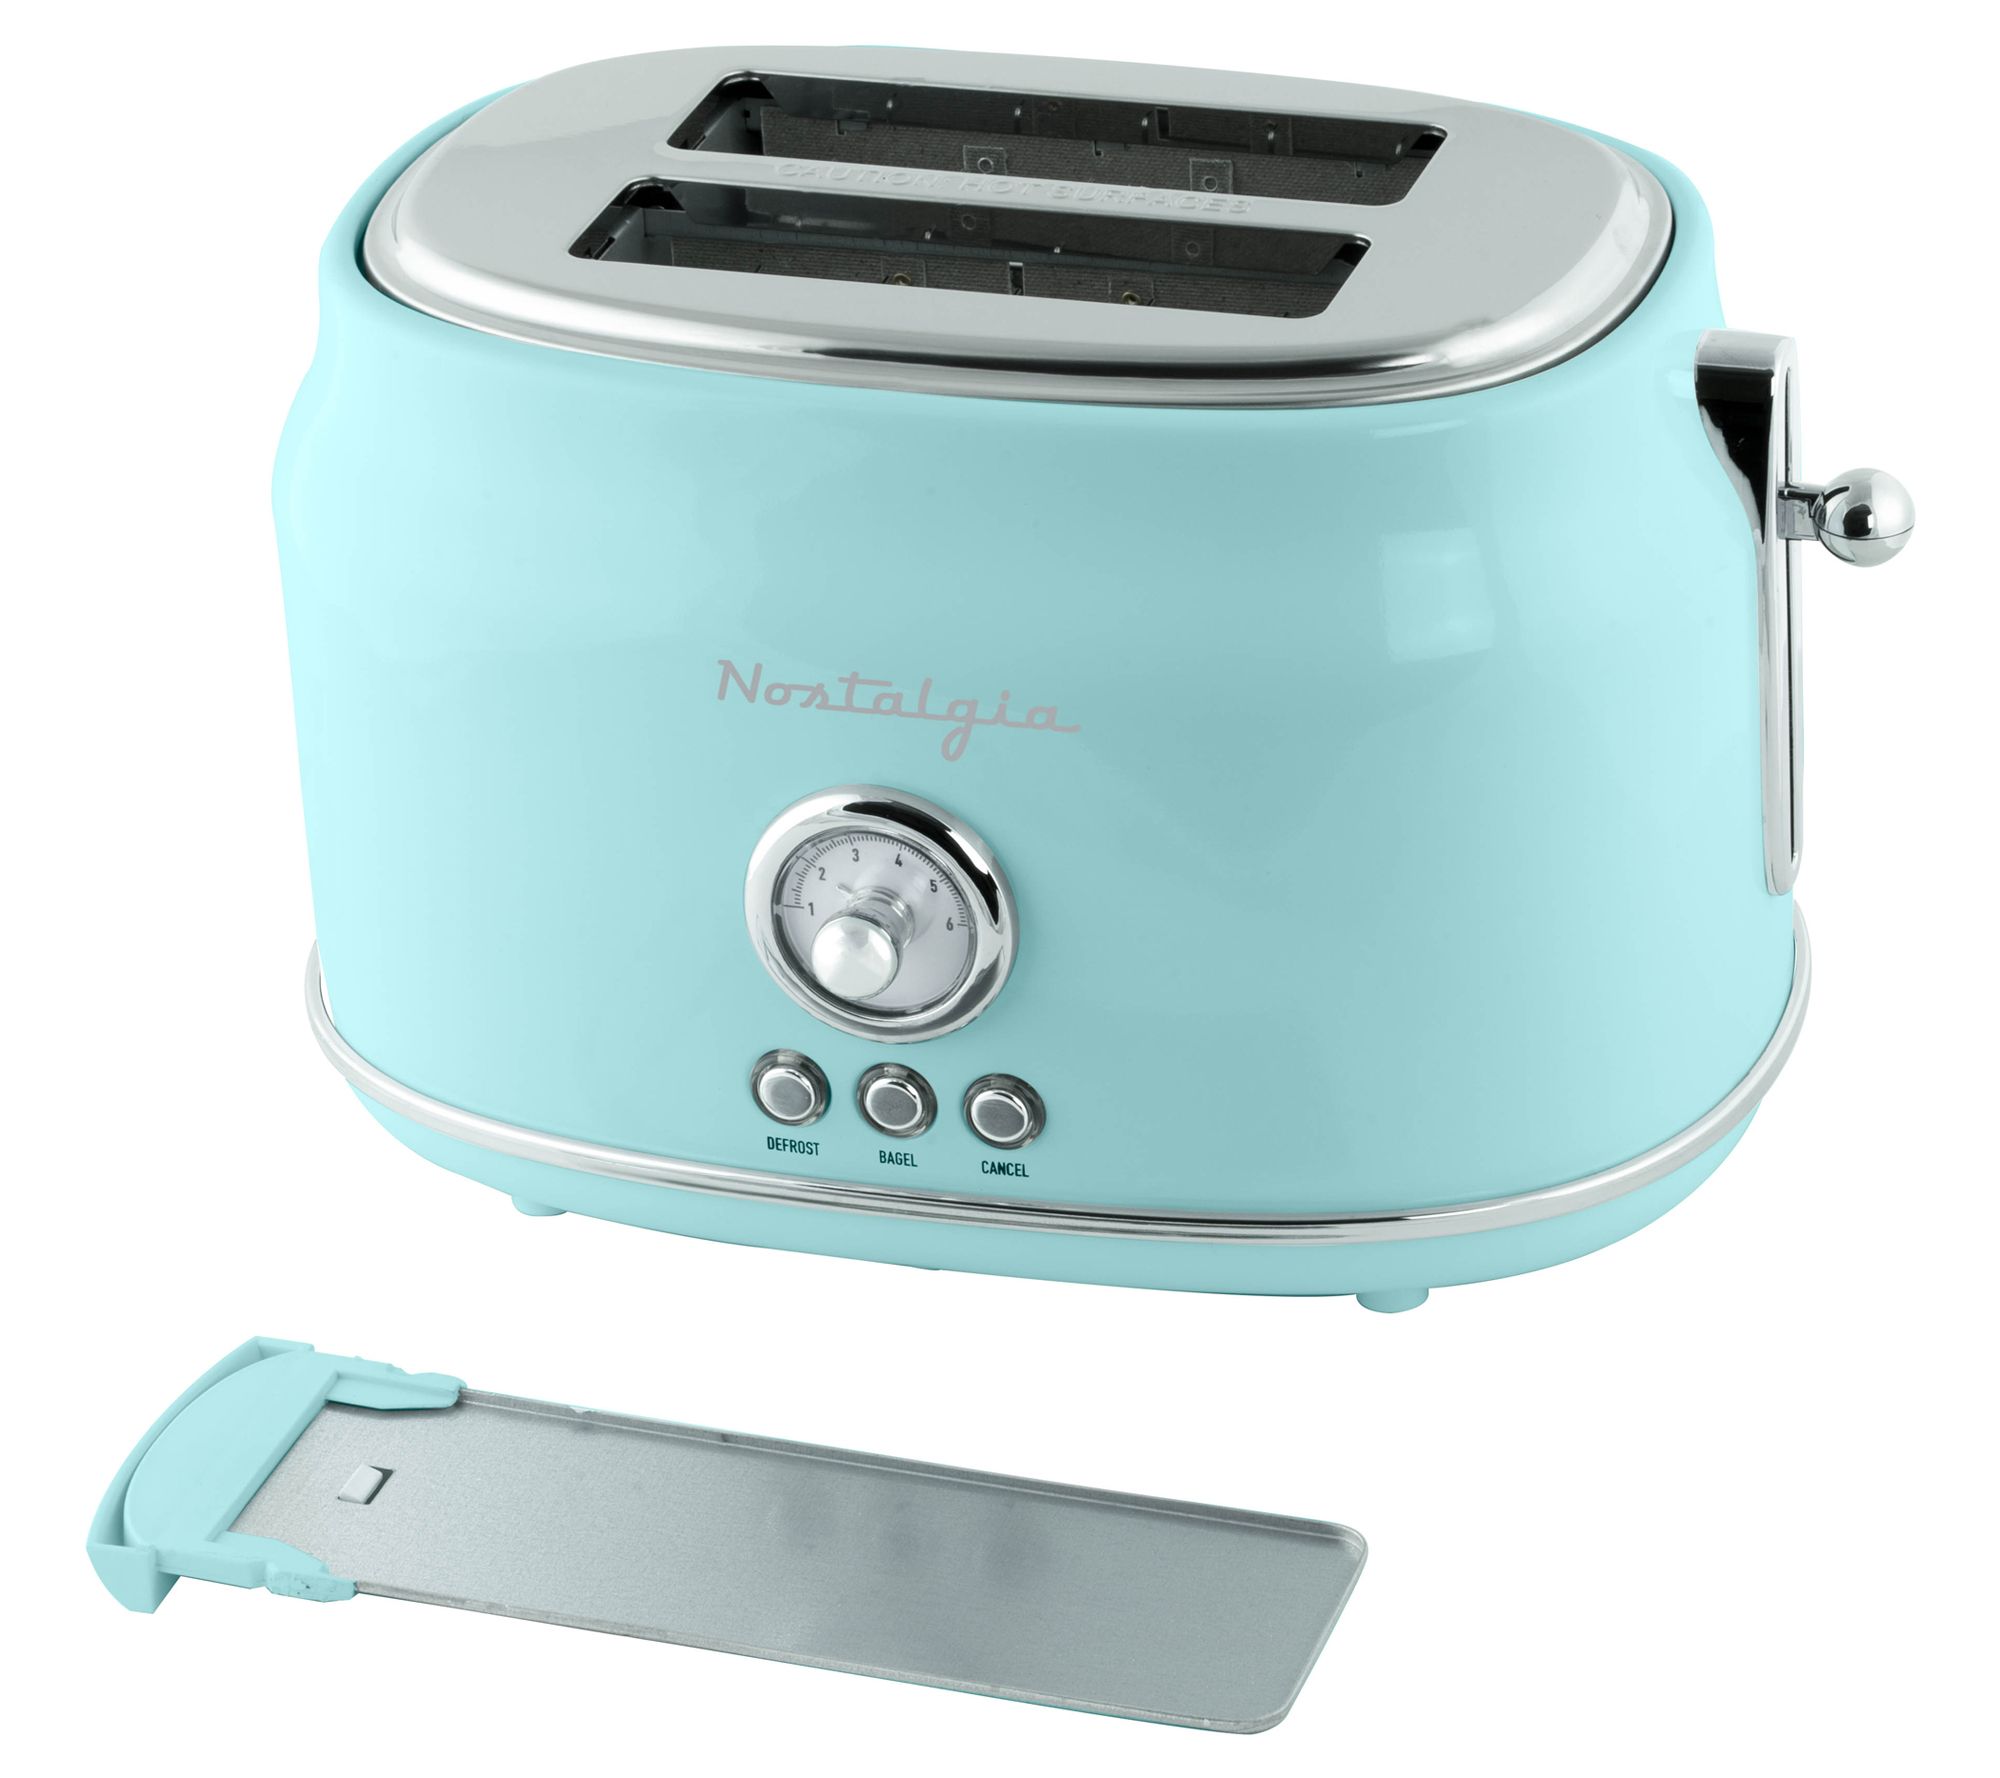 Nostalgia My Mini Single Slice Toaster = Retro Look Aqua/Teal